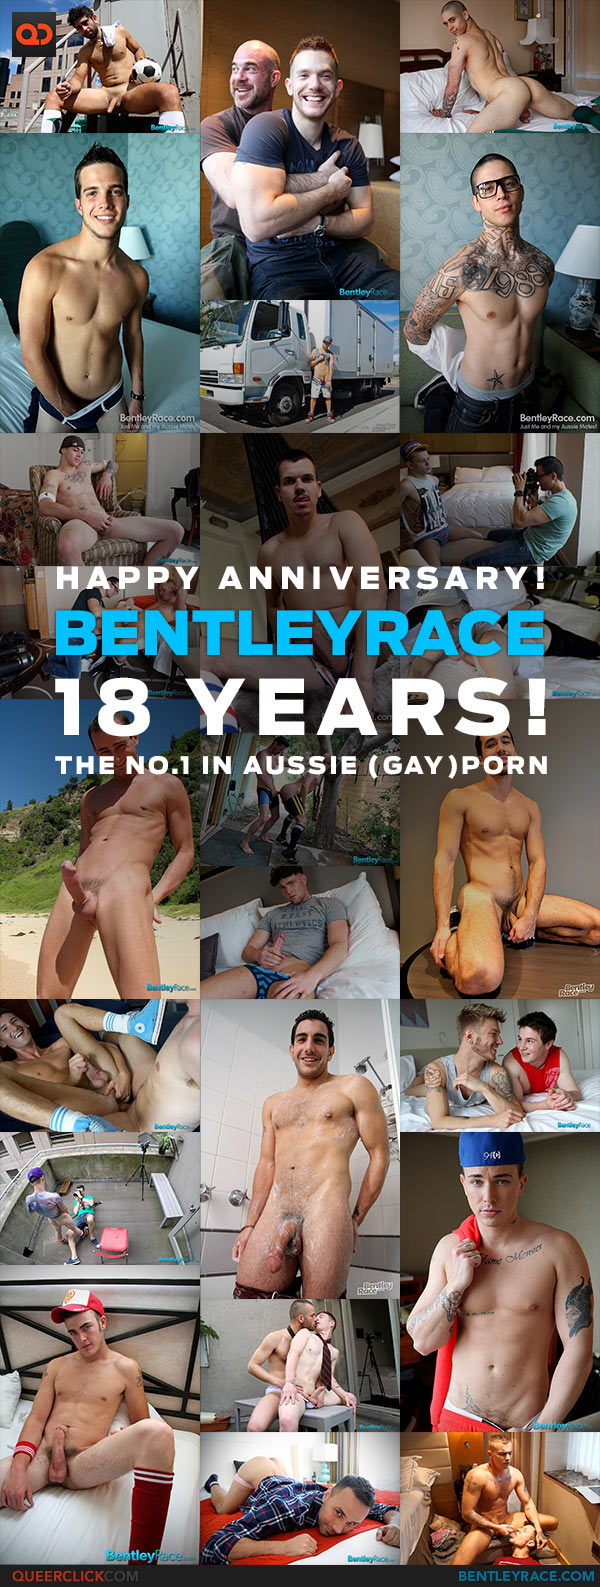 Bentley Race: Happy Anniversary! 18 Years of Aussie Gay Porn